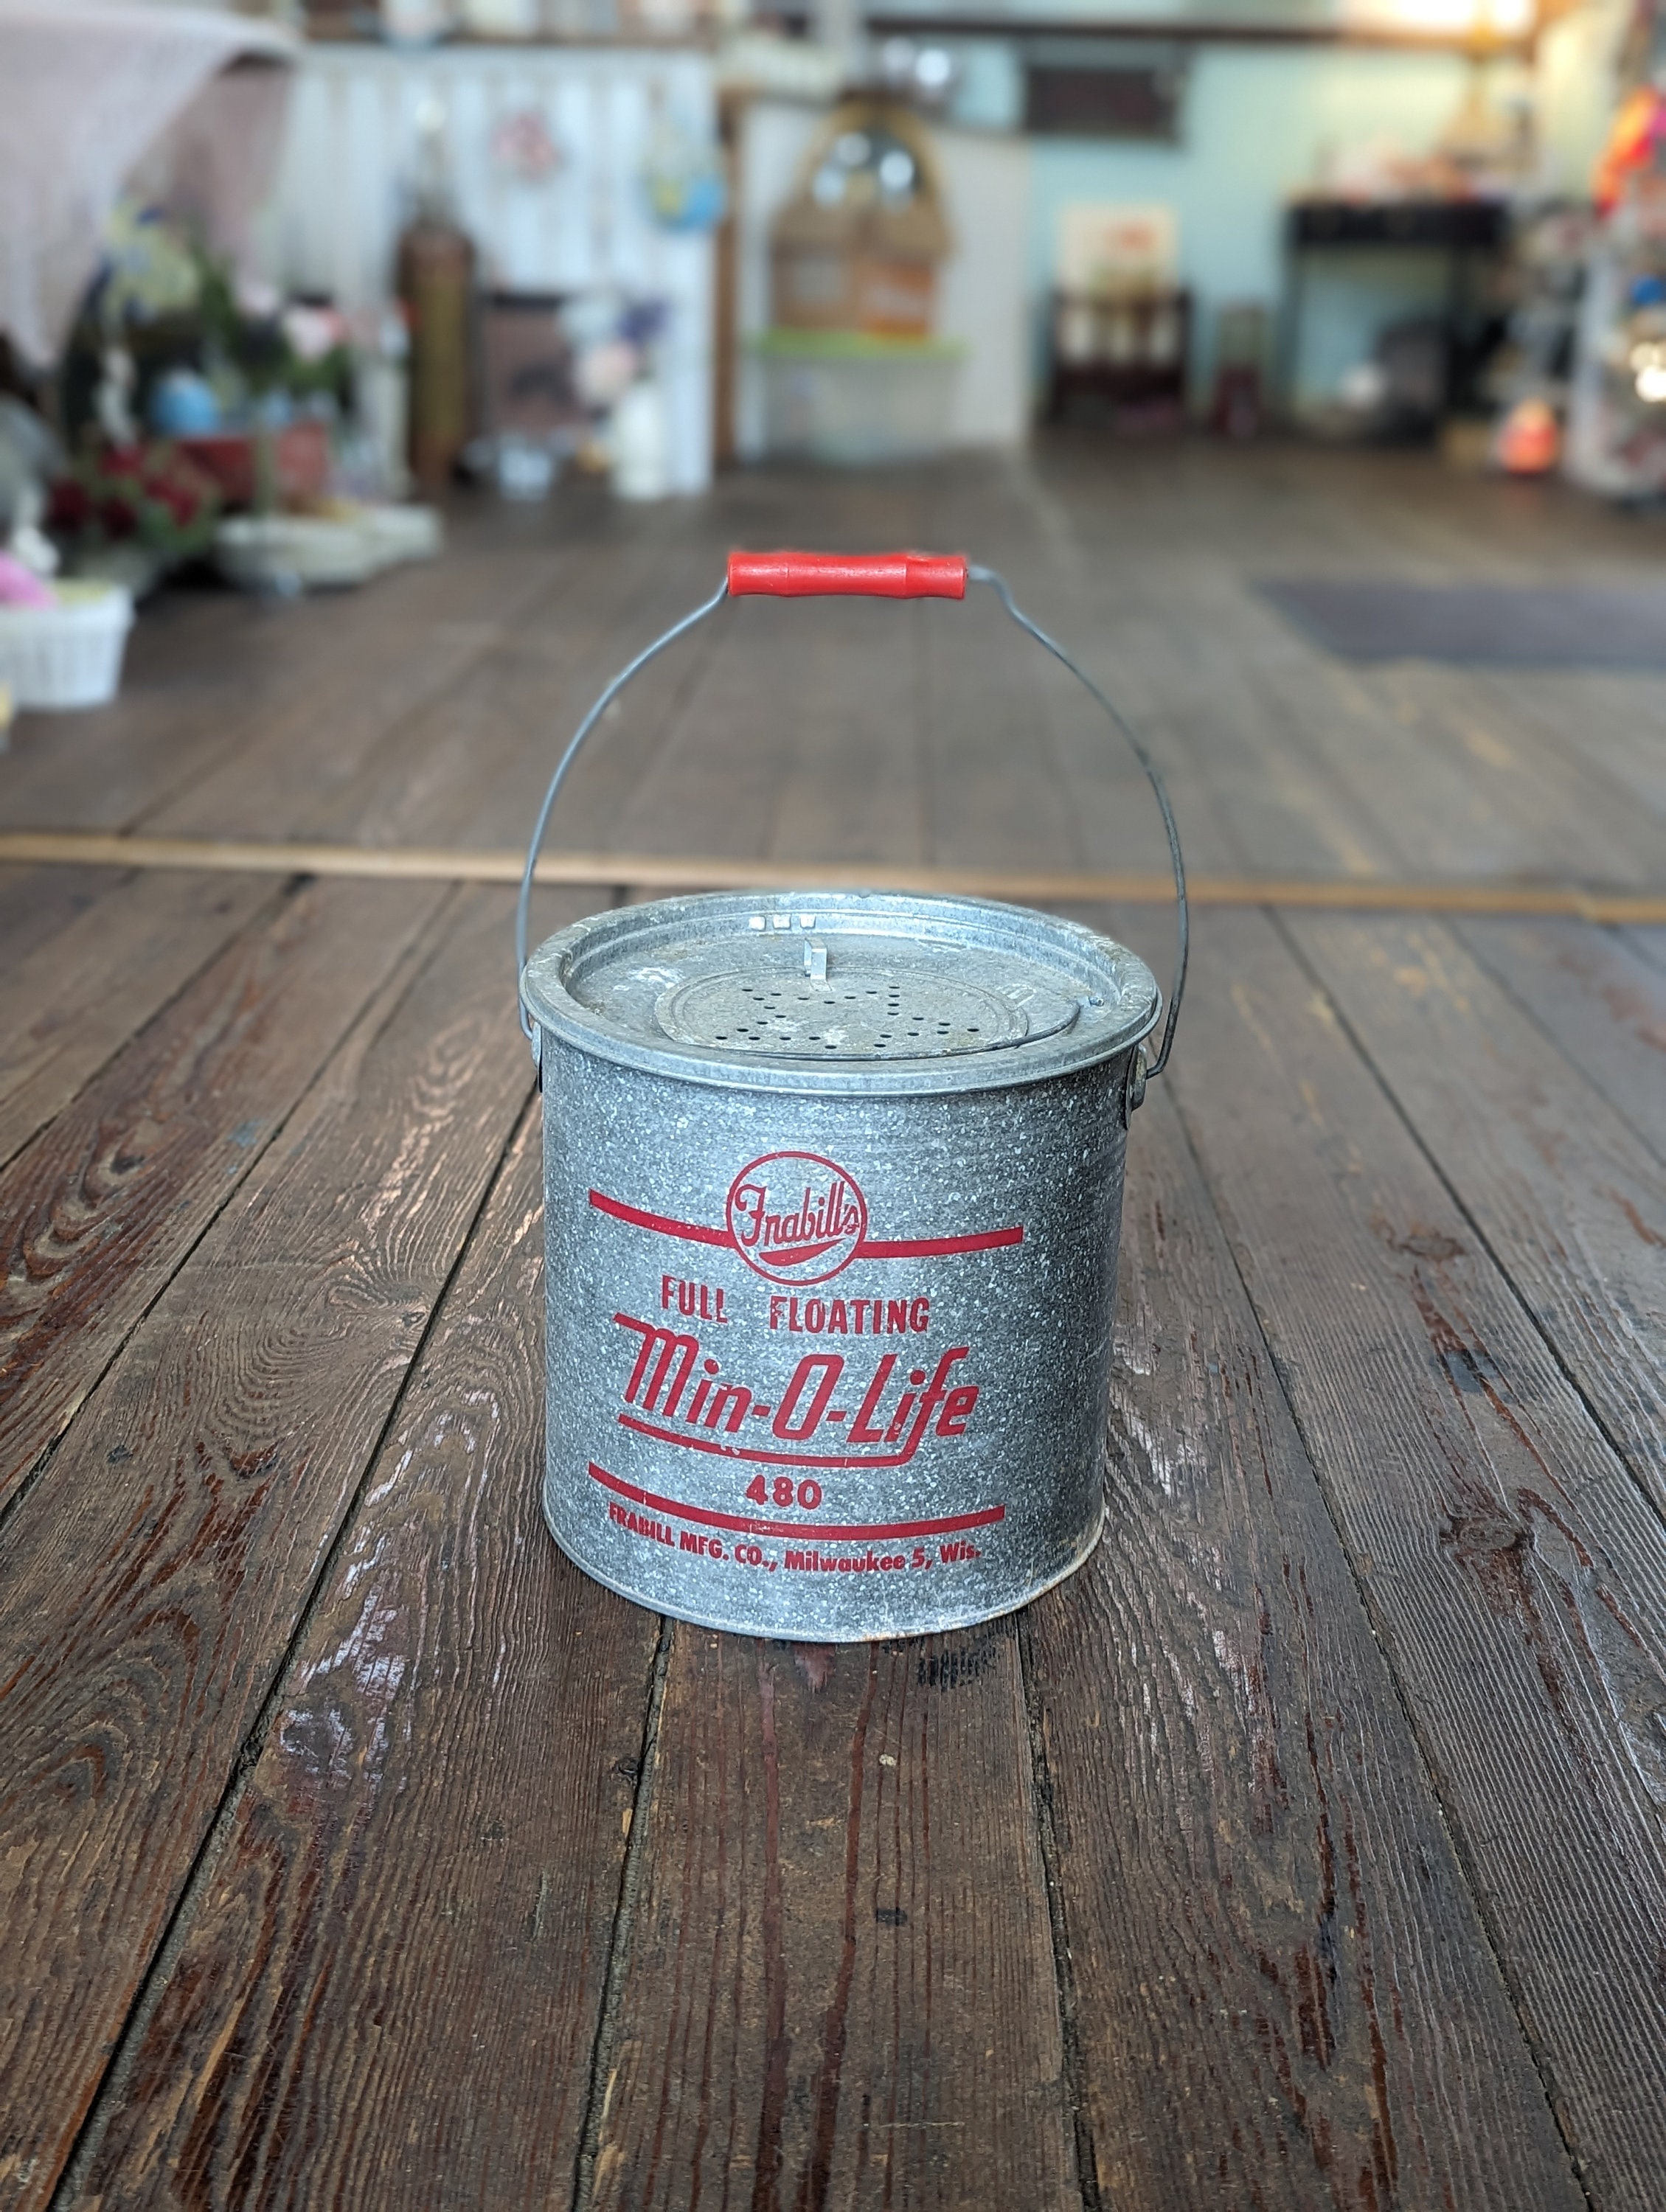 Vintage Galvanized Live Minnow Bait Bucket insert 8 tall 9.5 diameter  w/handle